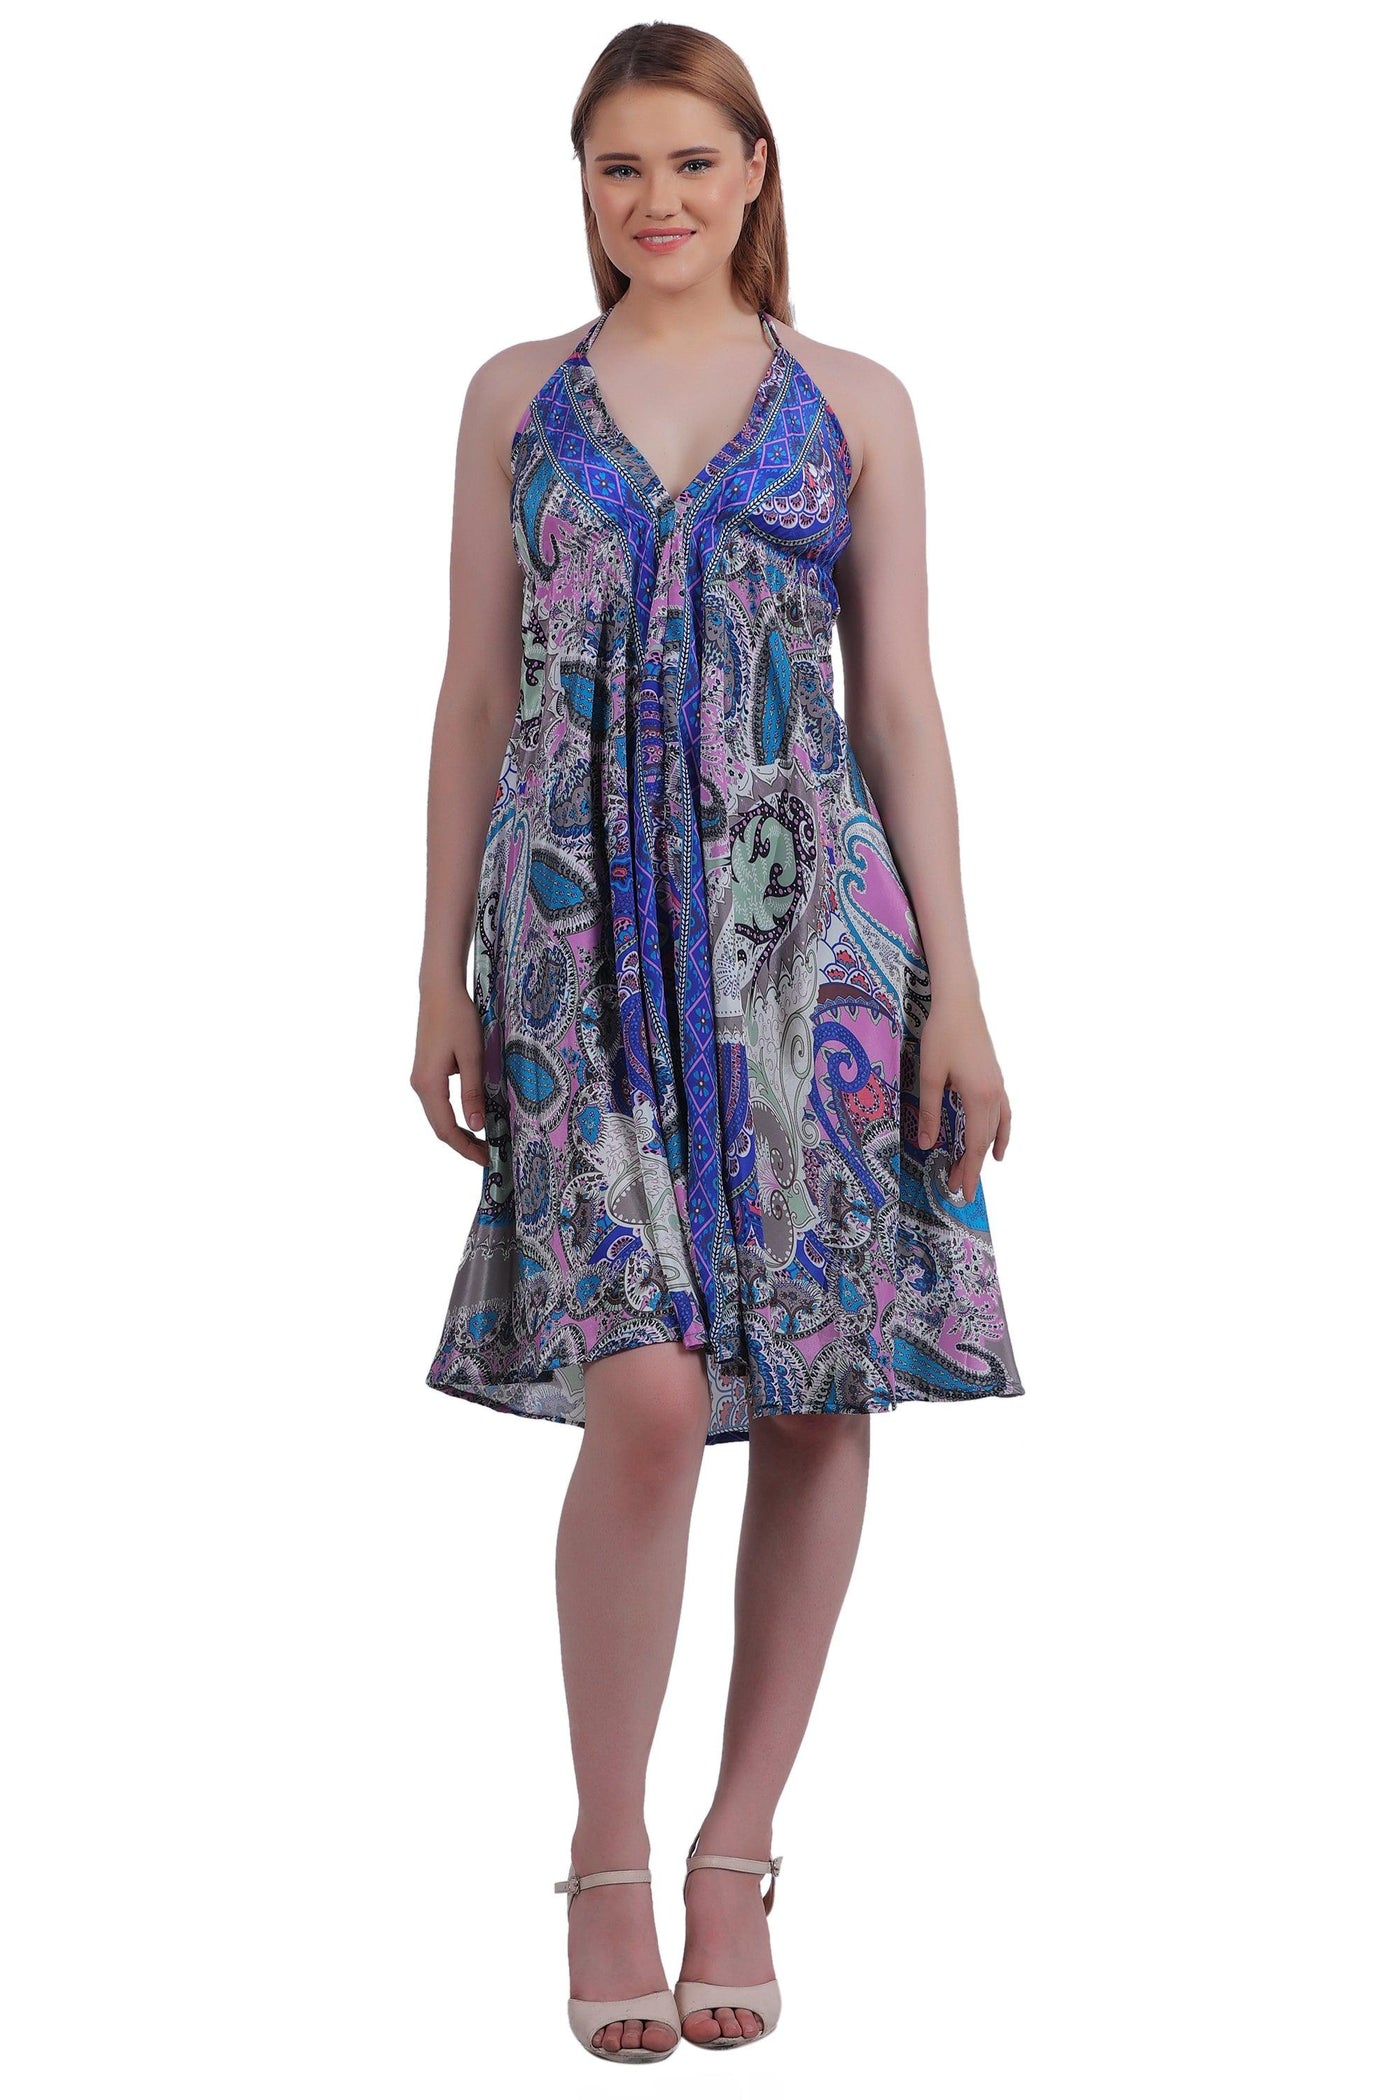 Silk Halter Top Dress AB21030  - Advance Apparels Inc